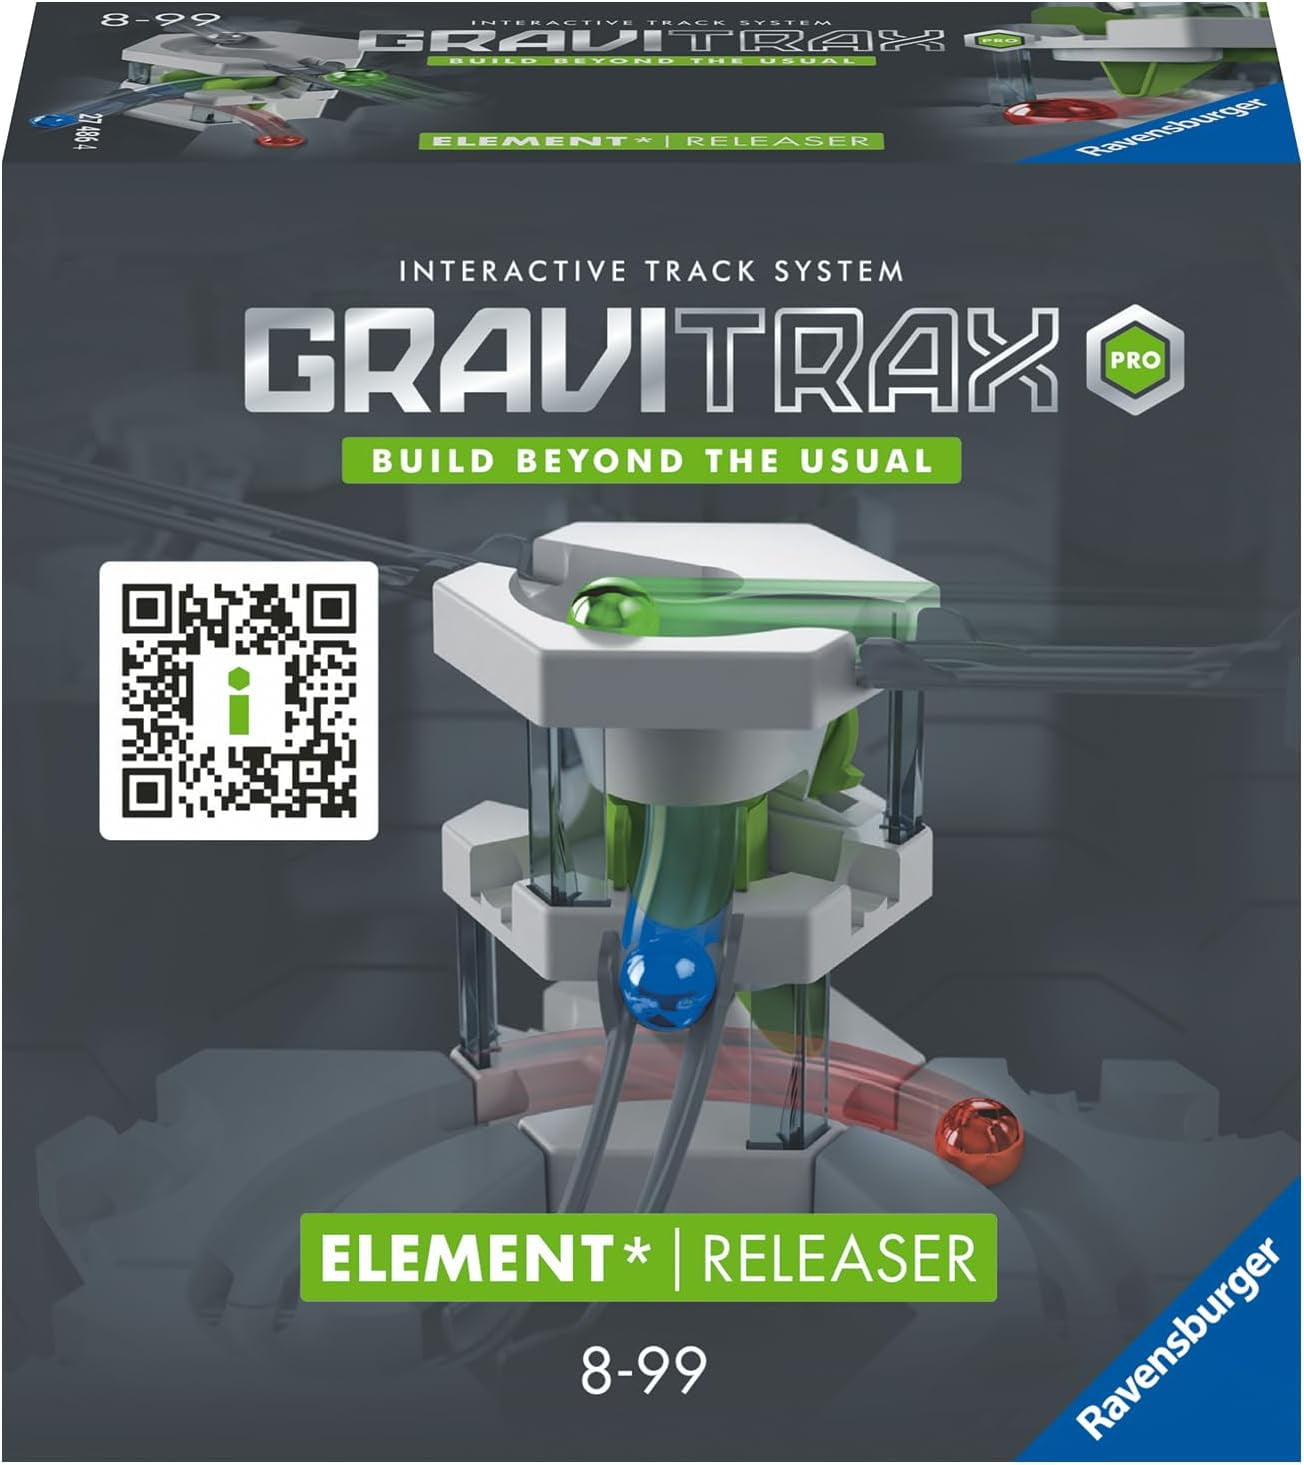 Gravitrax Pro Accessory Balls & Spinner - Toyberg